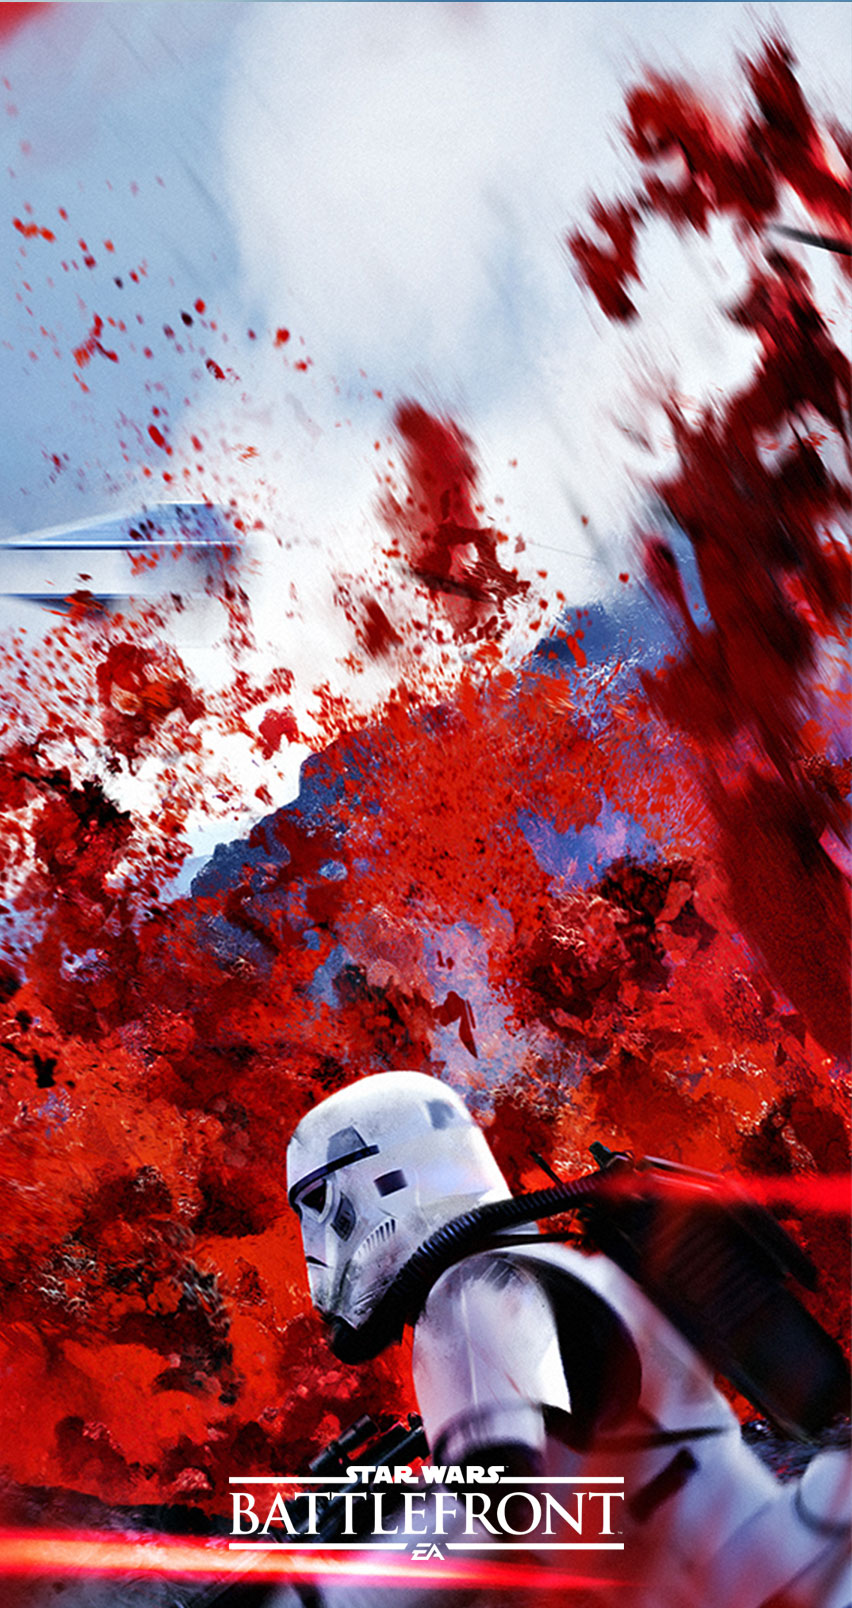 Star Wars Battlefront Gets A Batch Of Smartphone Wallpaper To Let